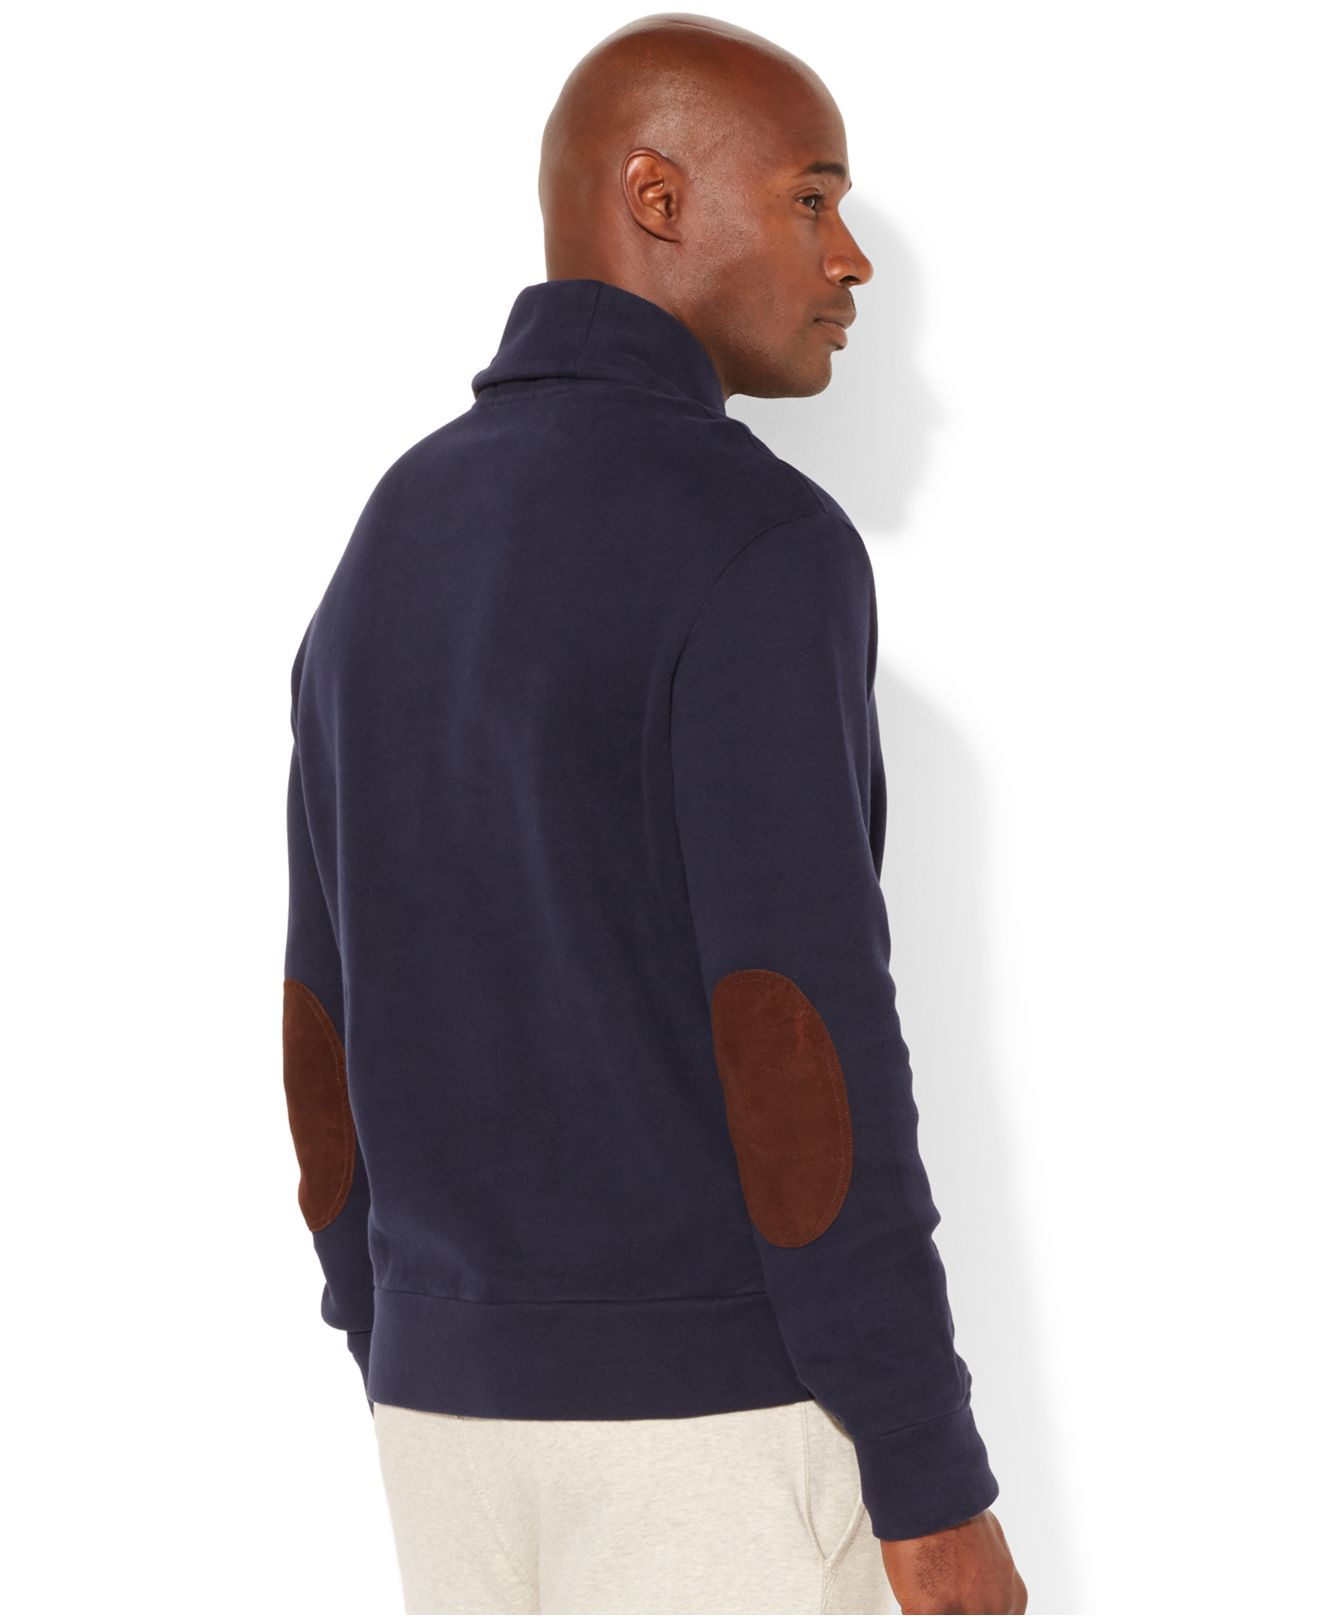 Cashmere Sweater Men Turn down Collar Long Sleeve Shirt